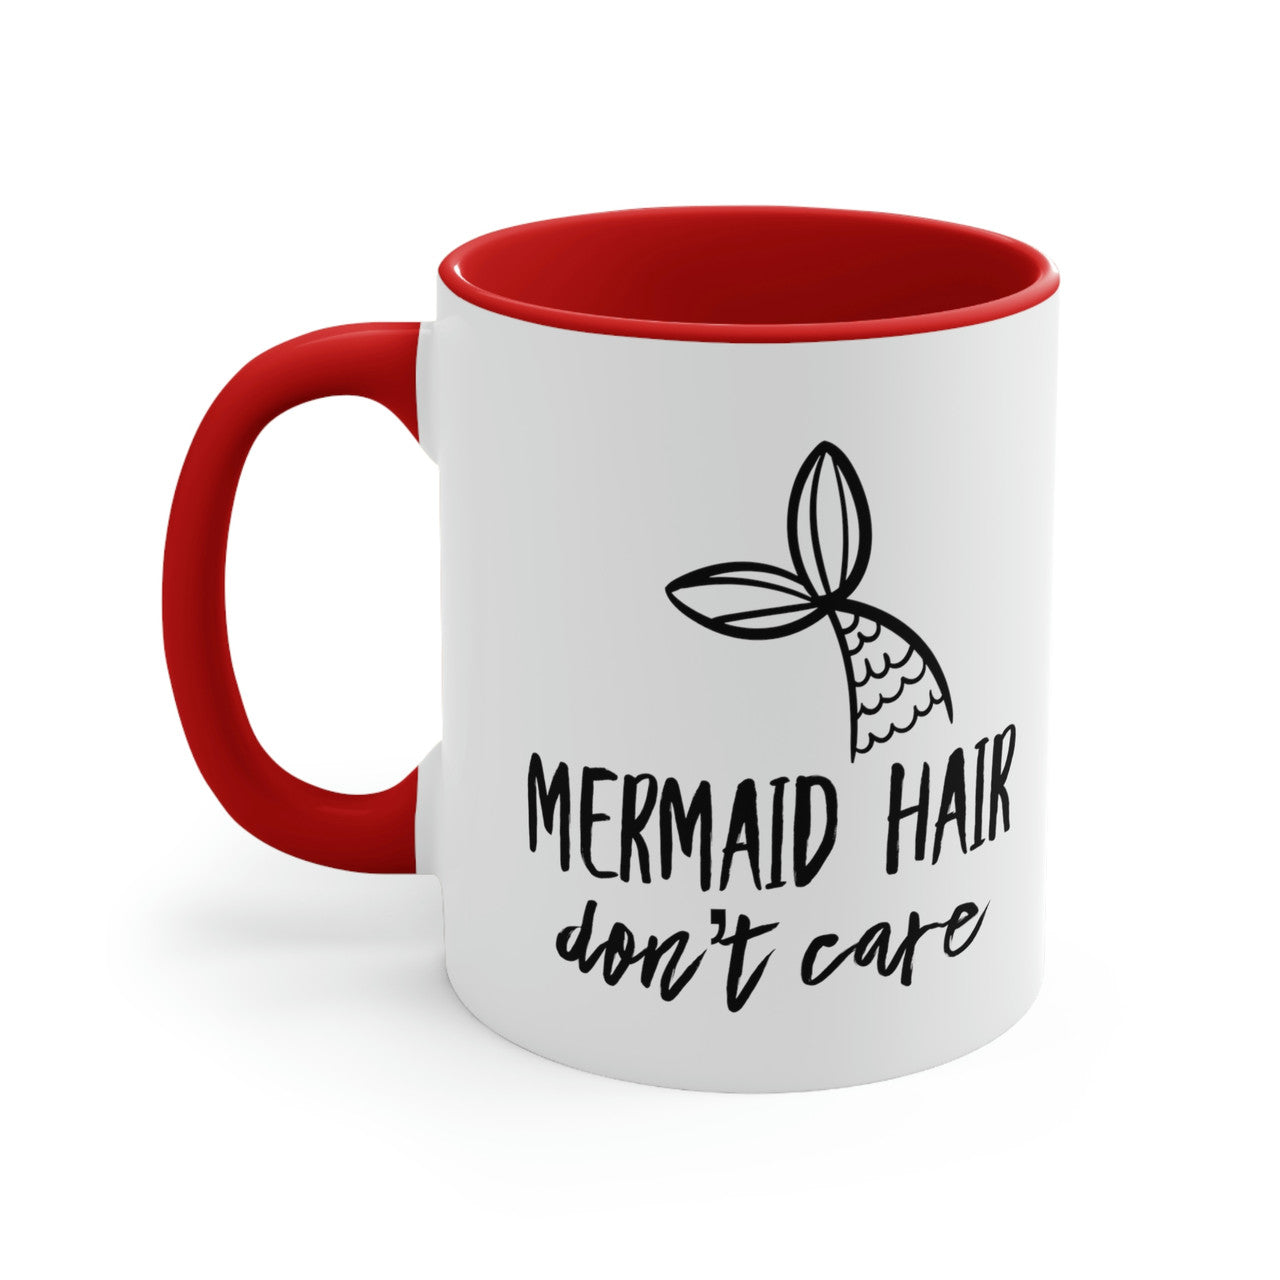 Mermaid Hair Don't Care Ceramic Beach Coffee Mug, 5 Colors Mugs New England Trading Co Red  